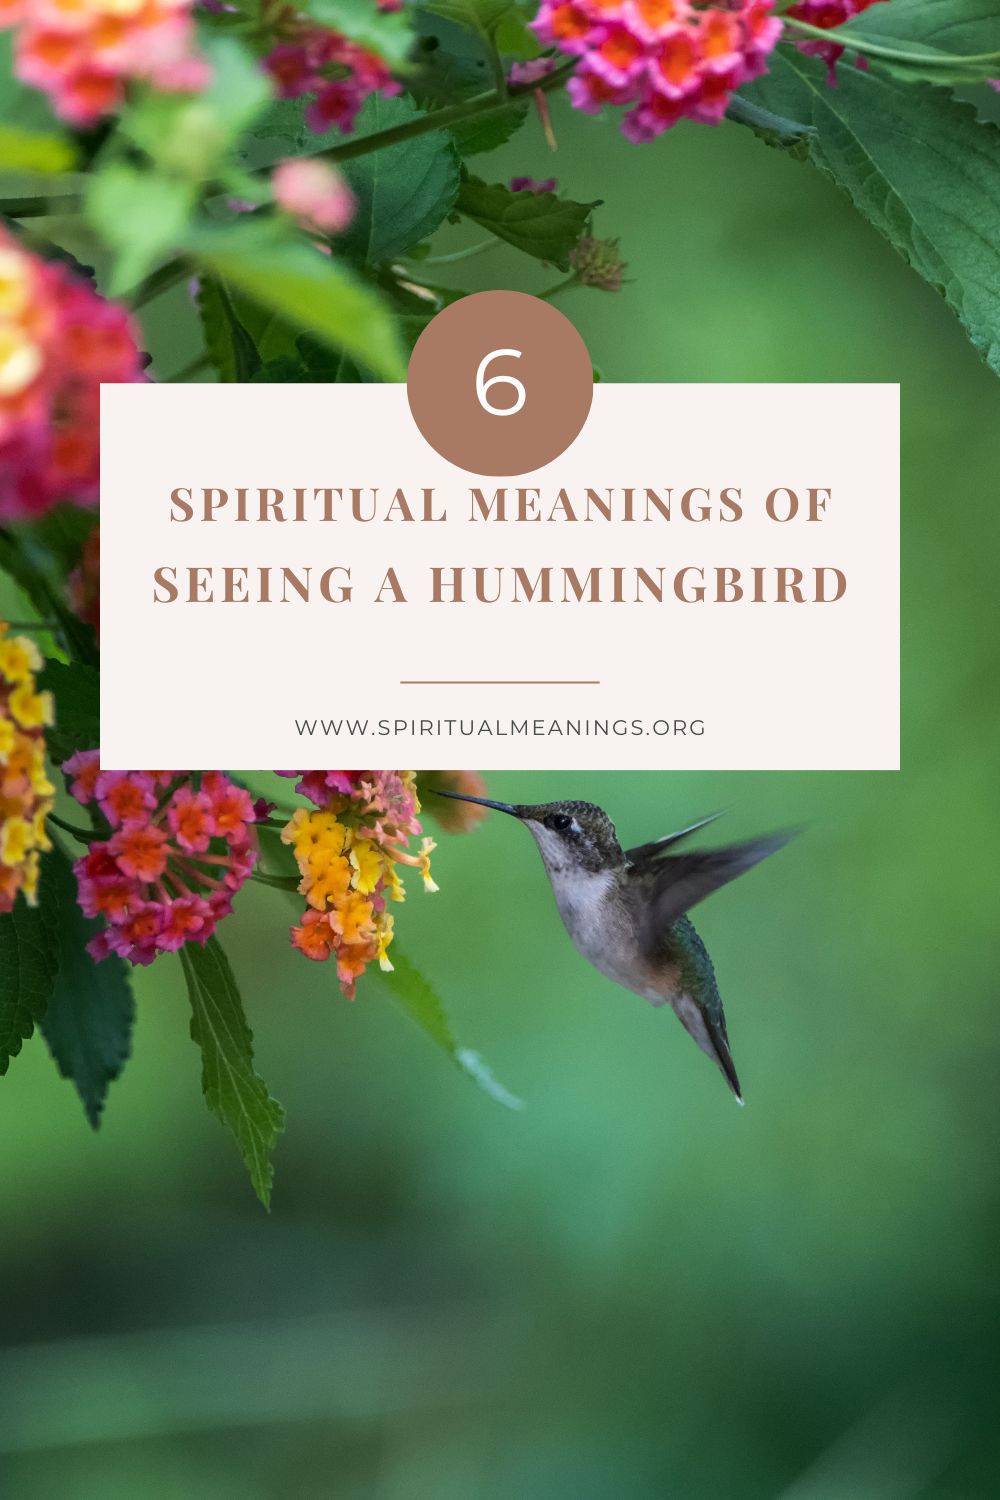 Hummingbird associations